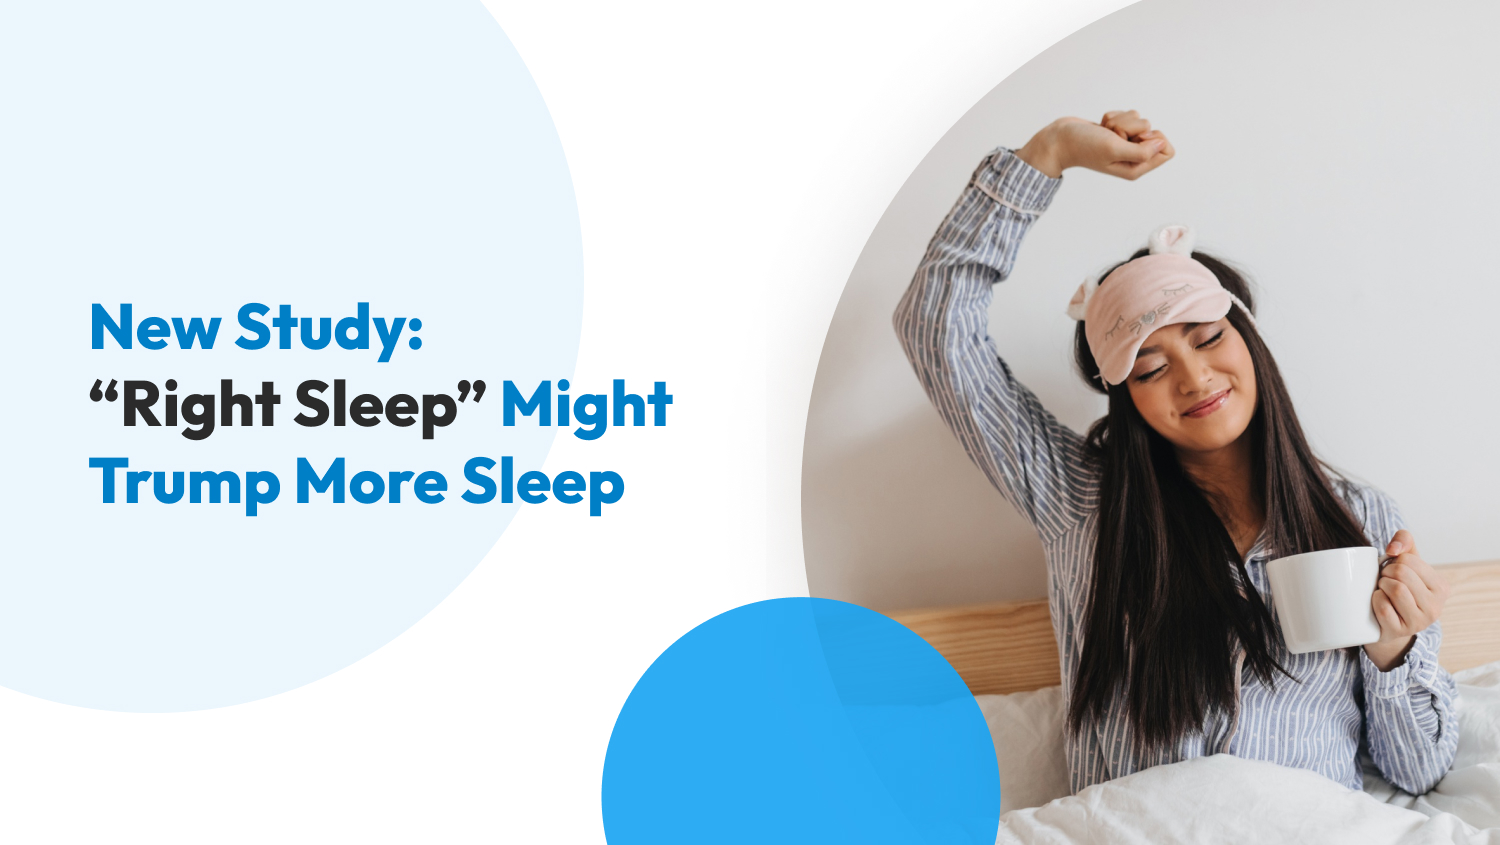 New Study: “Right Sleep” Might Trump More Sleep